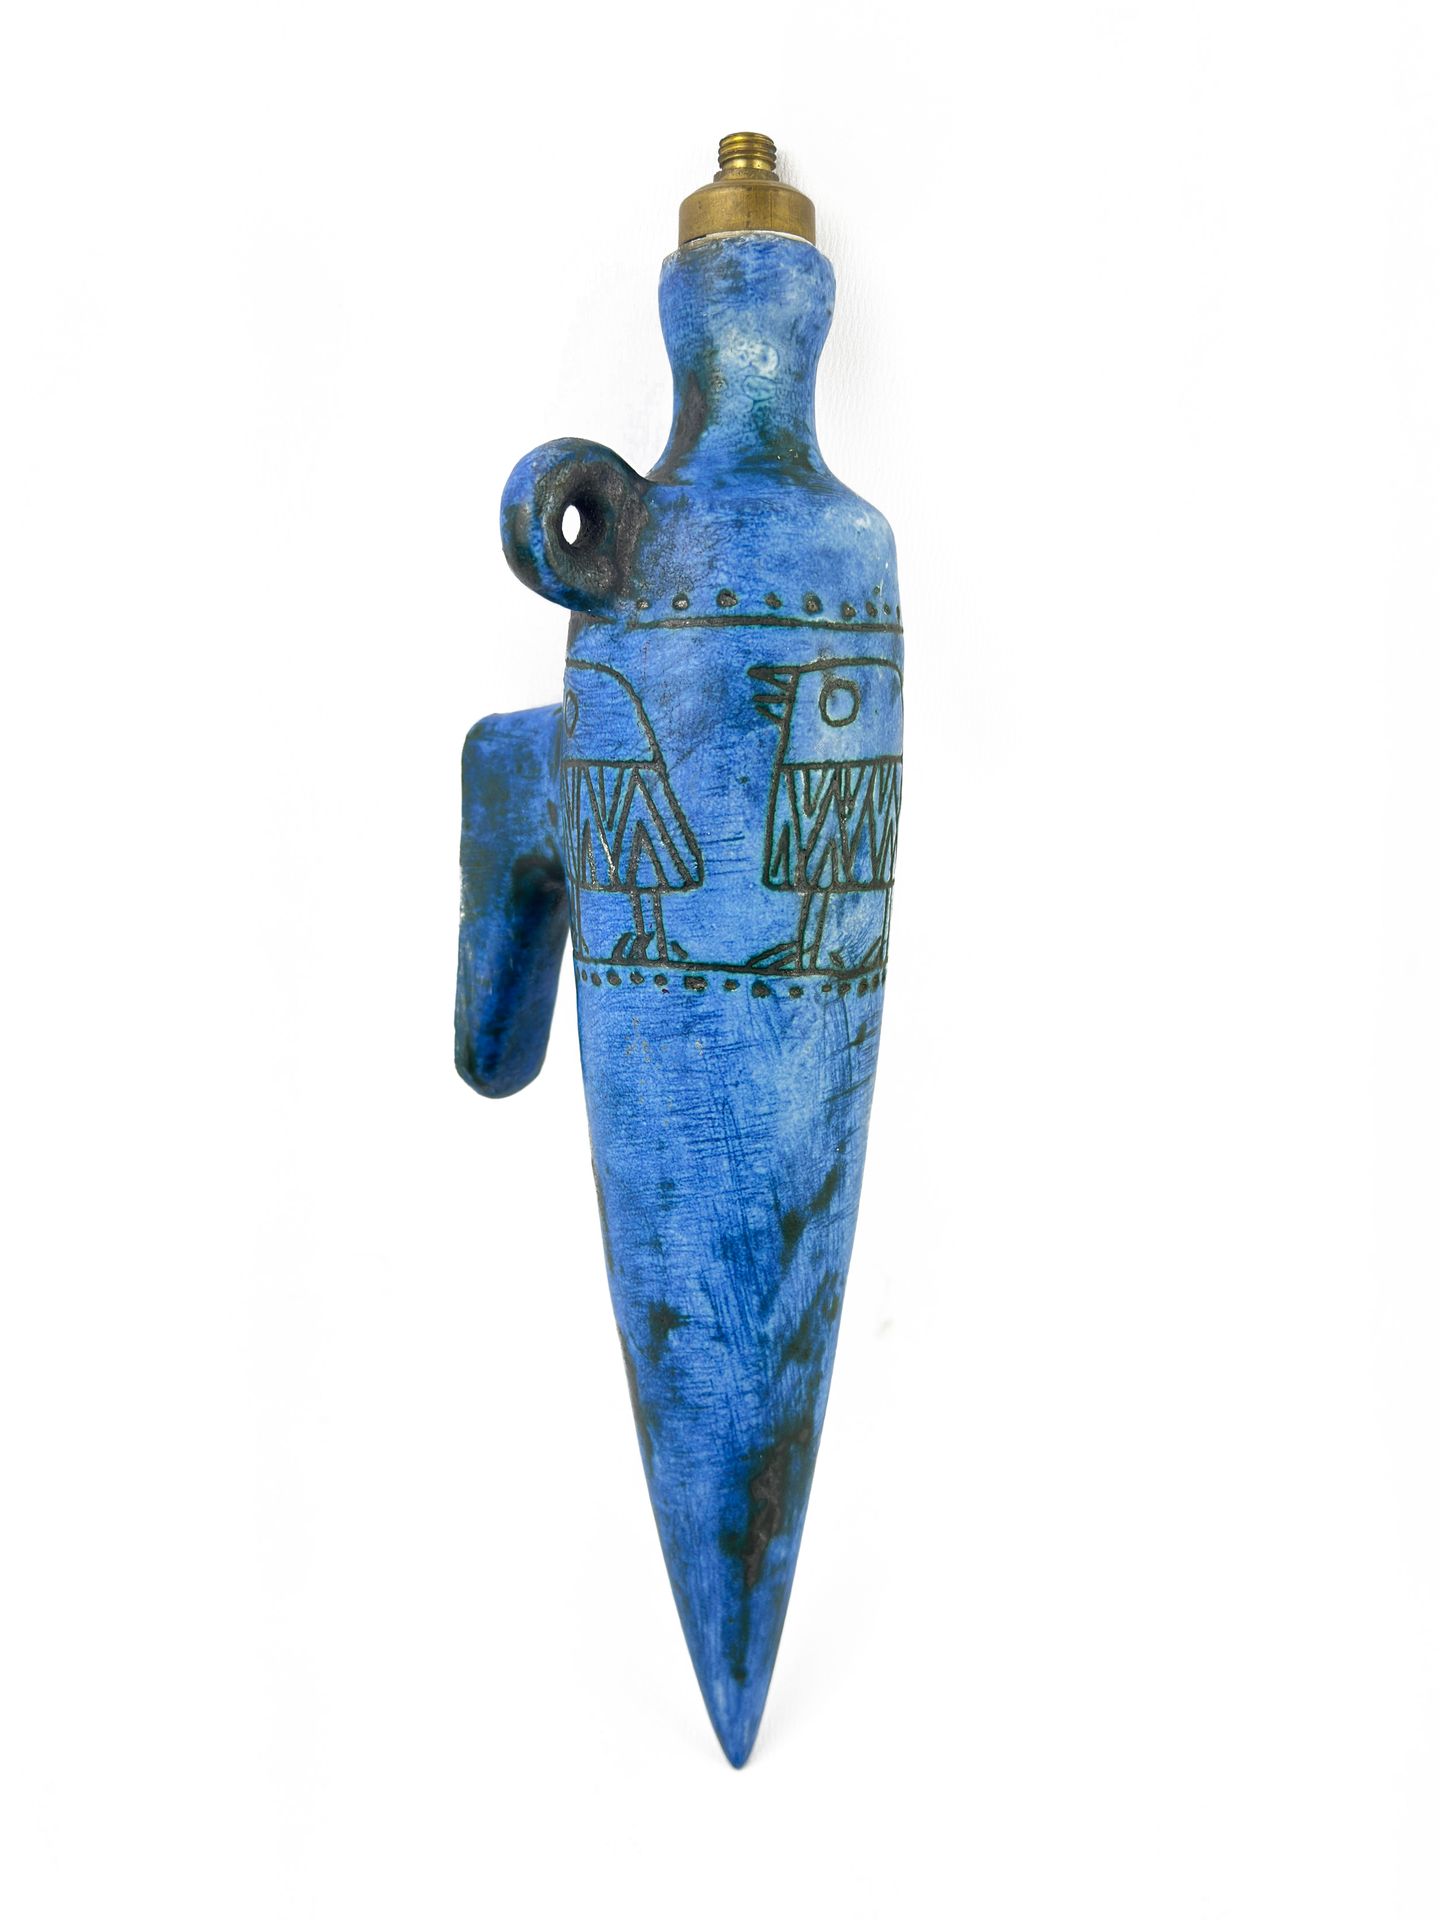 Null 雅克-布林（1920-1995 年）
蓝黑色珐琅陶瓷壁灯，双耳瓶造型，饰以飞鸟。
H.高 31 厘米

专家：罗曼-库莱